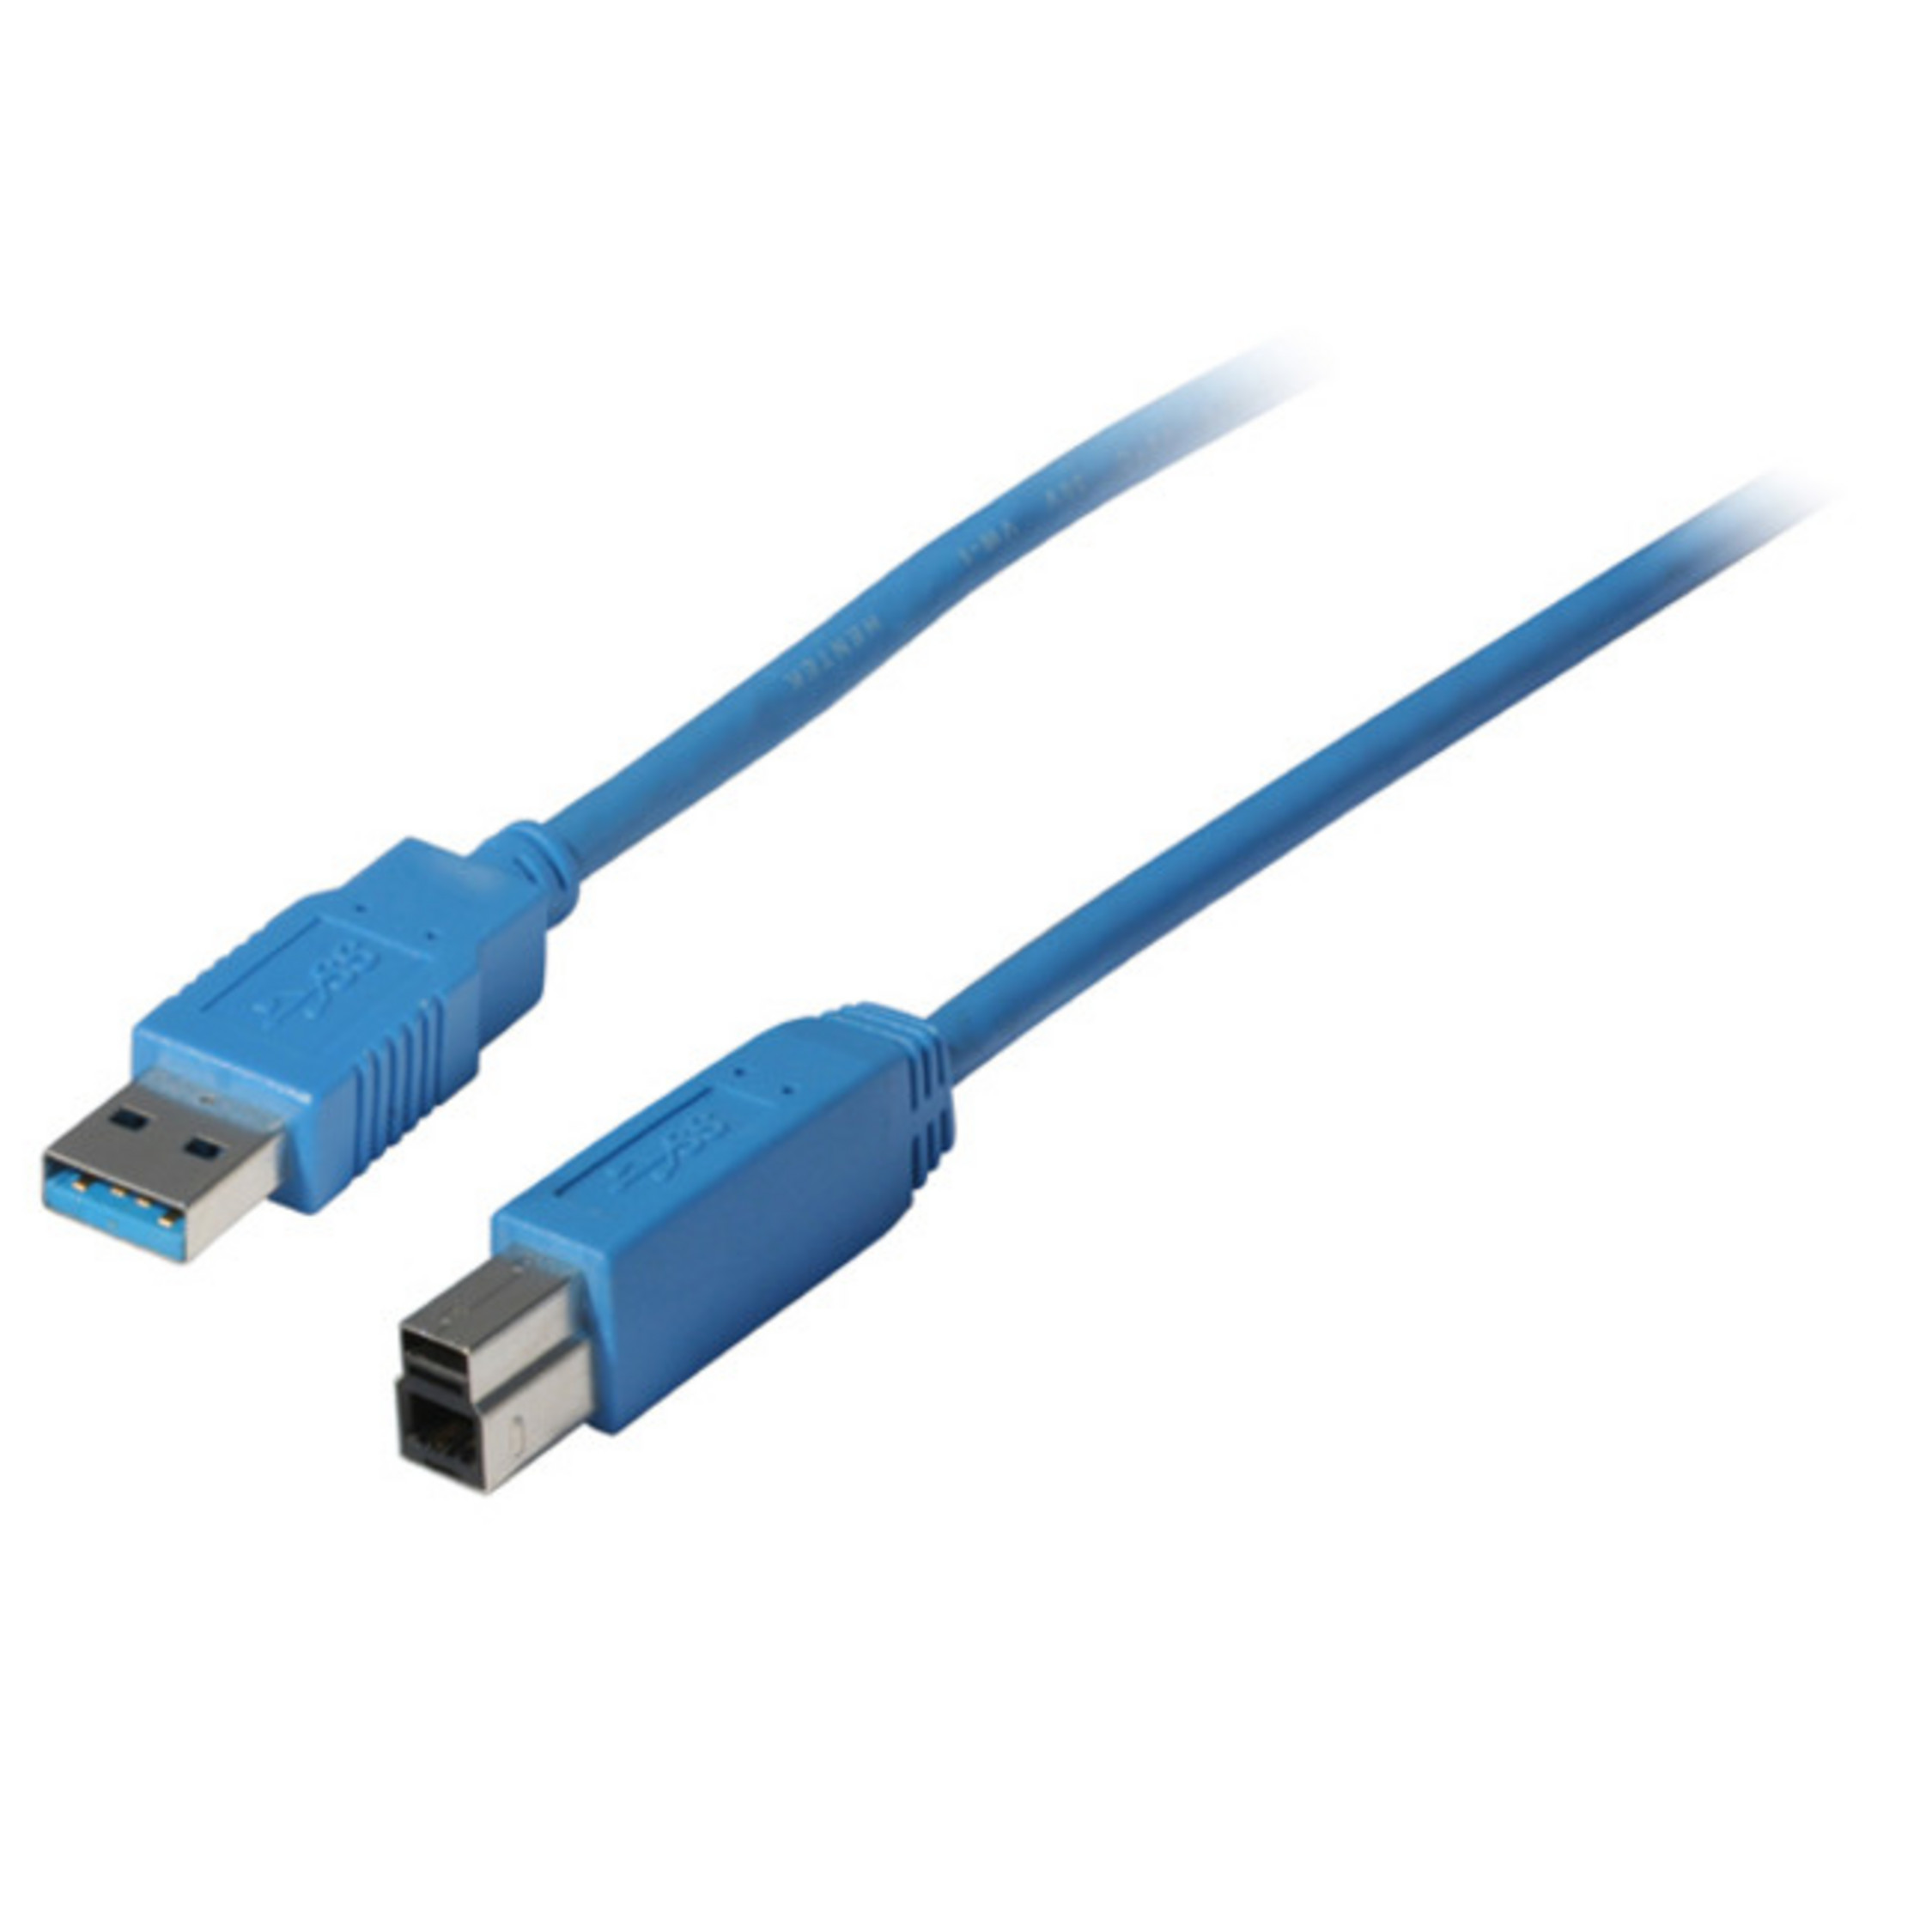 USB / CONNECTIVITY USB Stecker Kabel Stecker blau A 3.0 MAXIMUM S/CONN B 1,8m Kabel USB